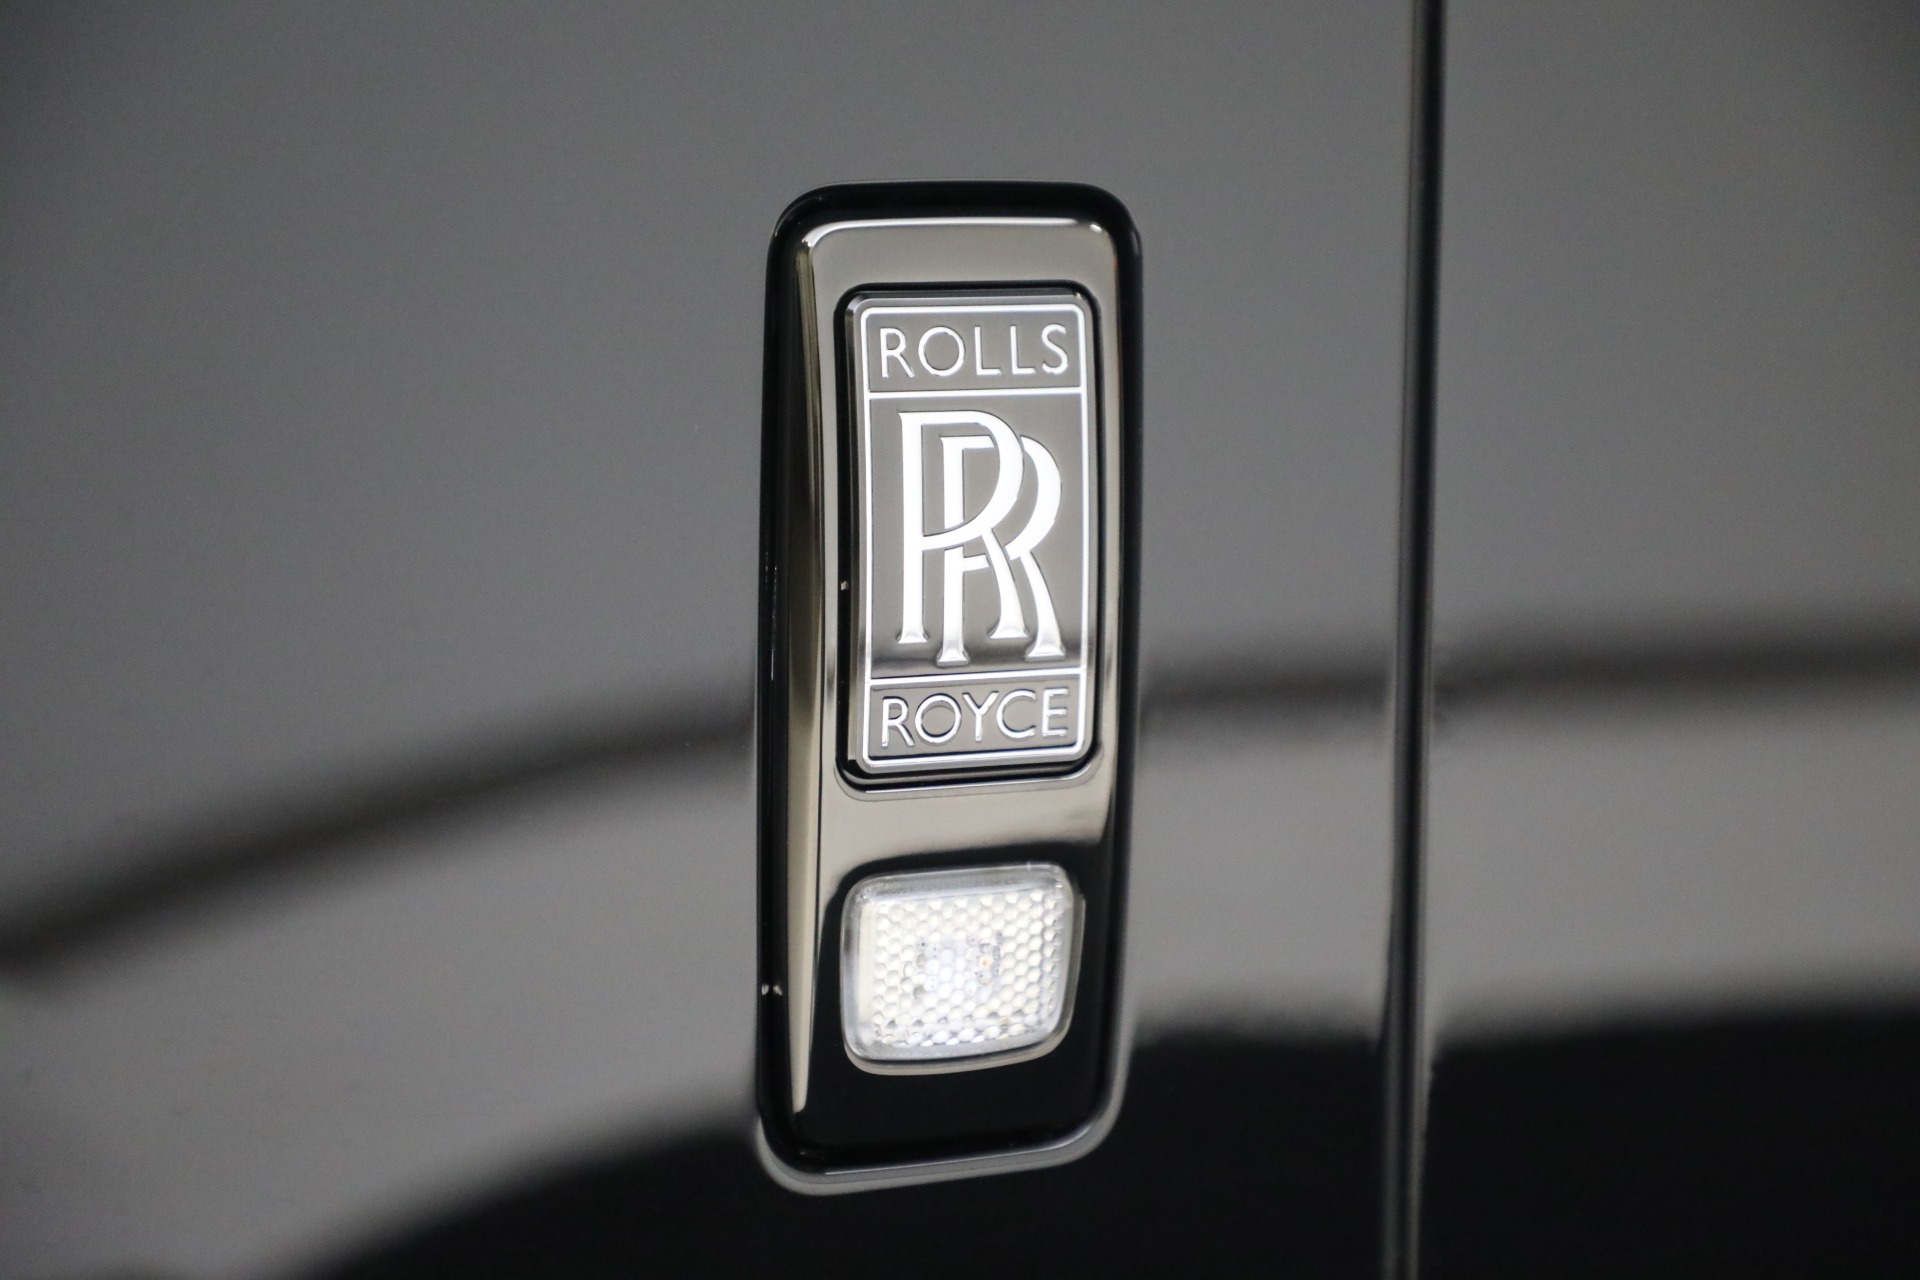 New 2024 Rolls Royce Black Badge Cullinan